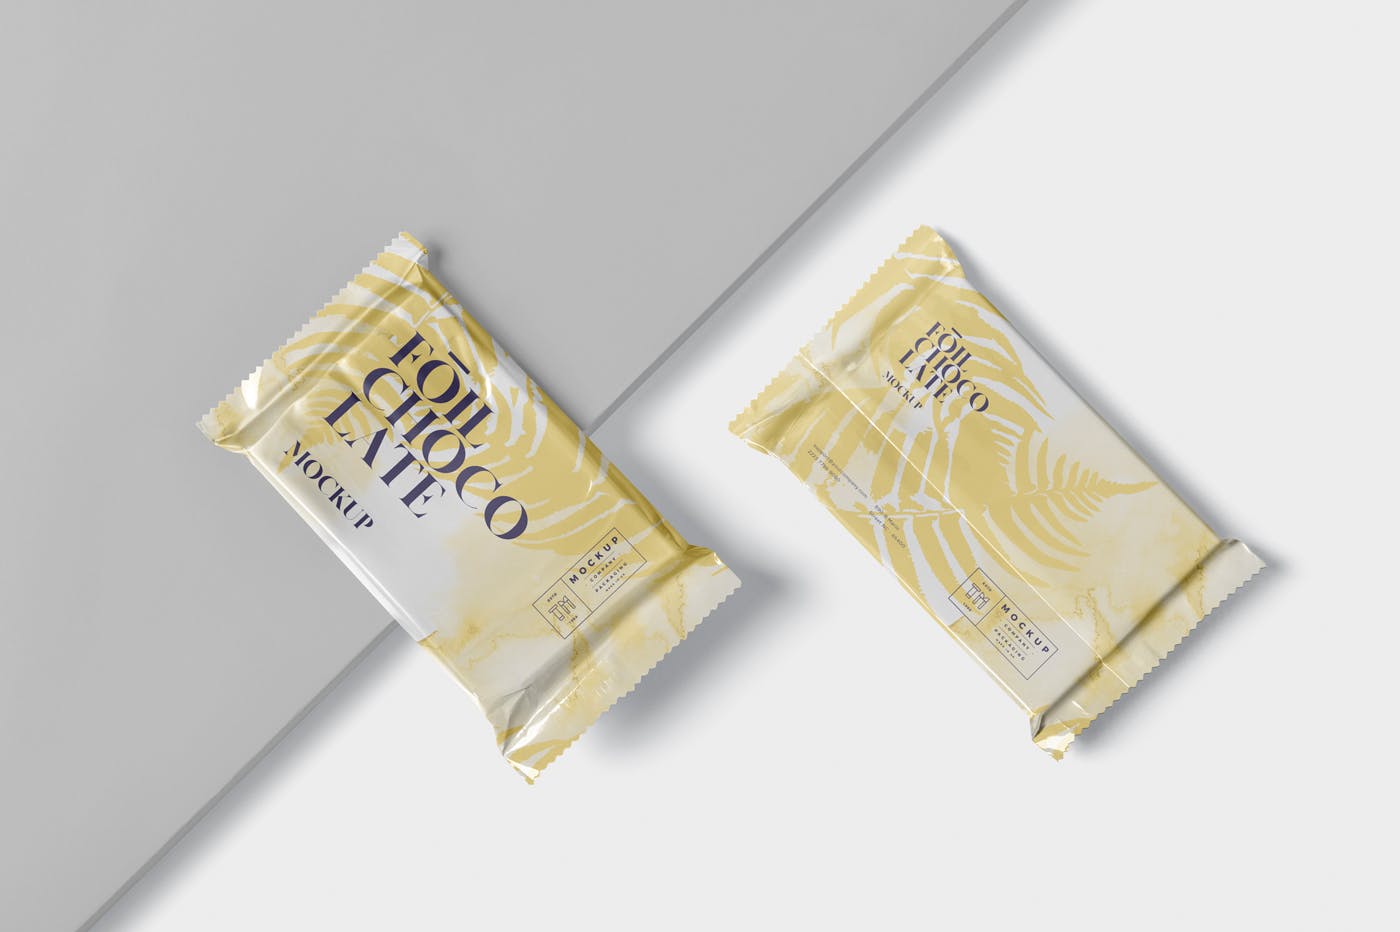 巧克力超薄铝箔纸包装设计效果图素材库精选 Foil Chocolate Packaging Mockup – Slim Size插图(2)